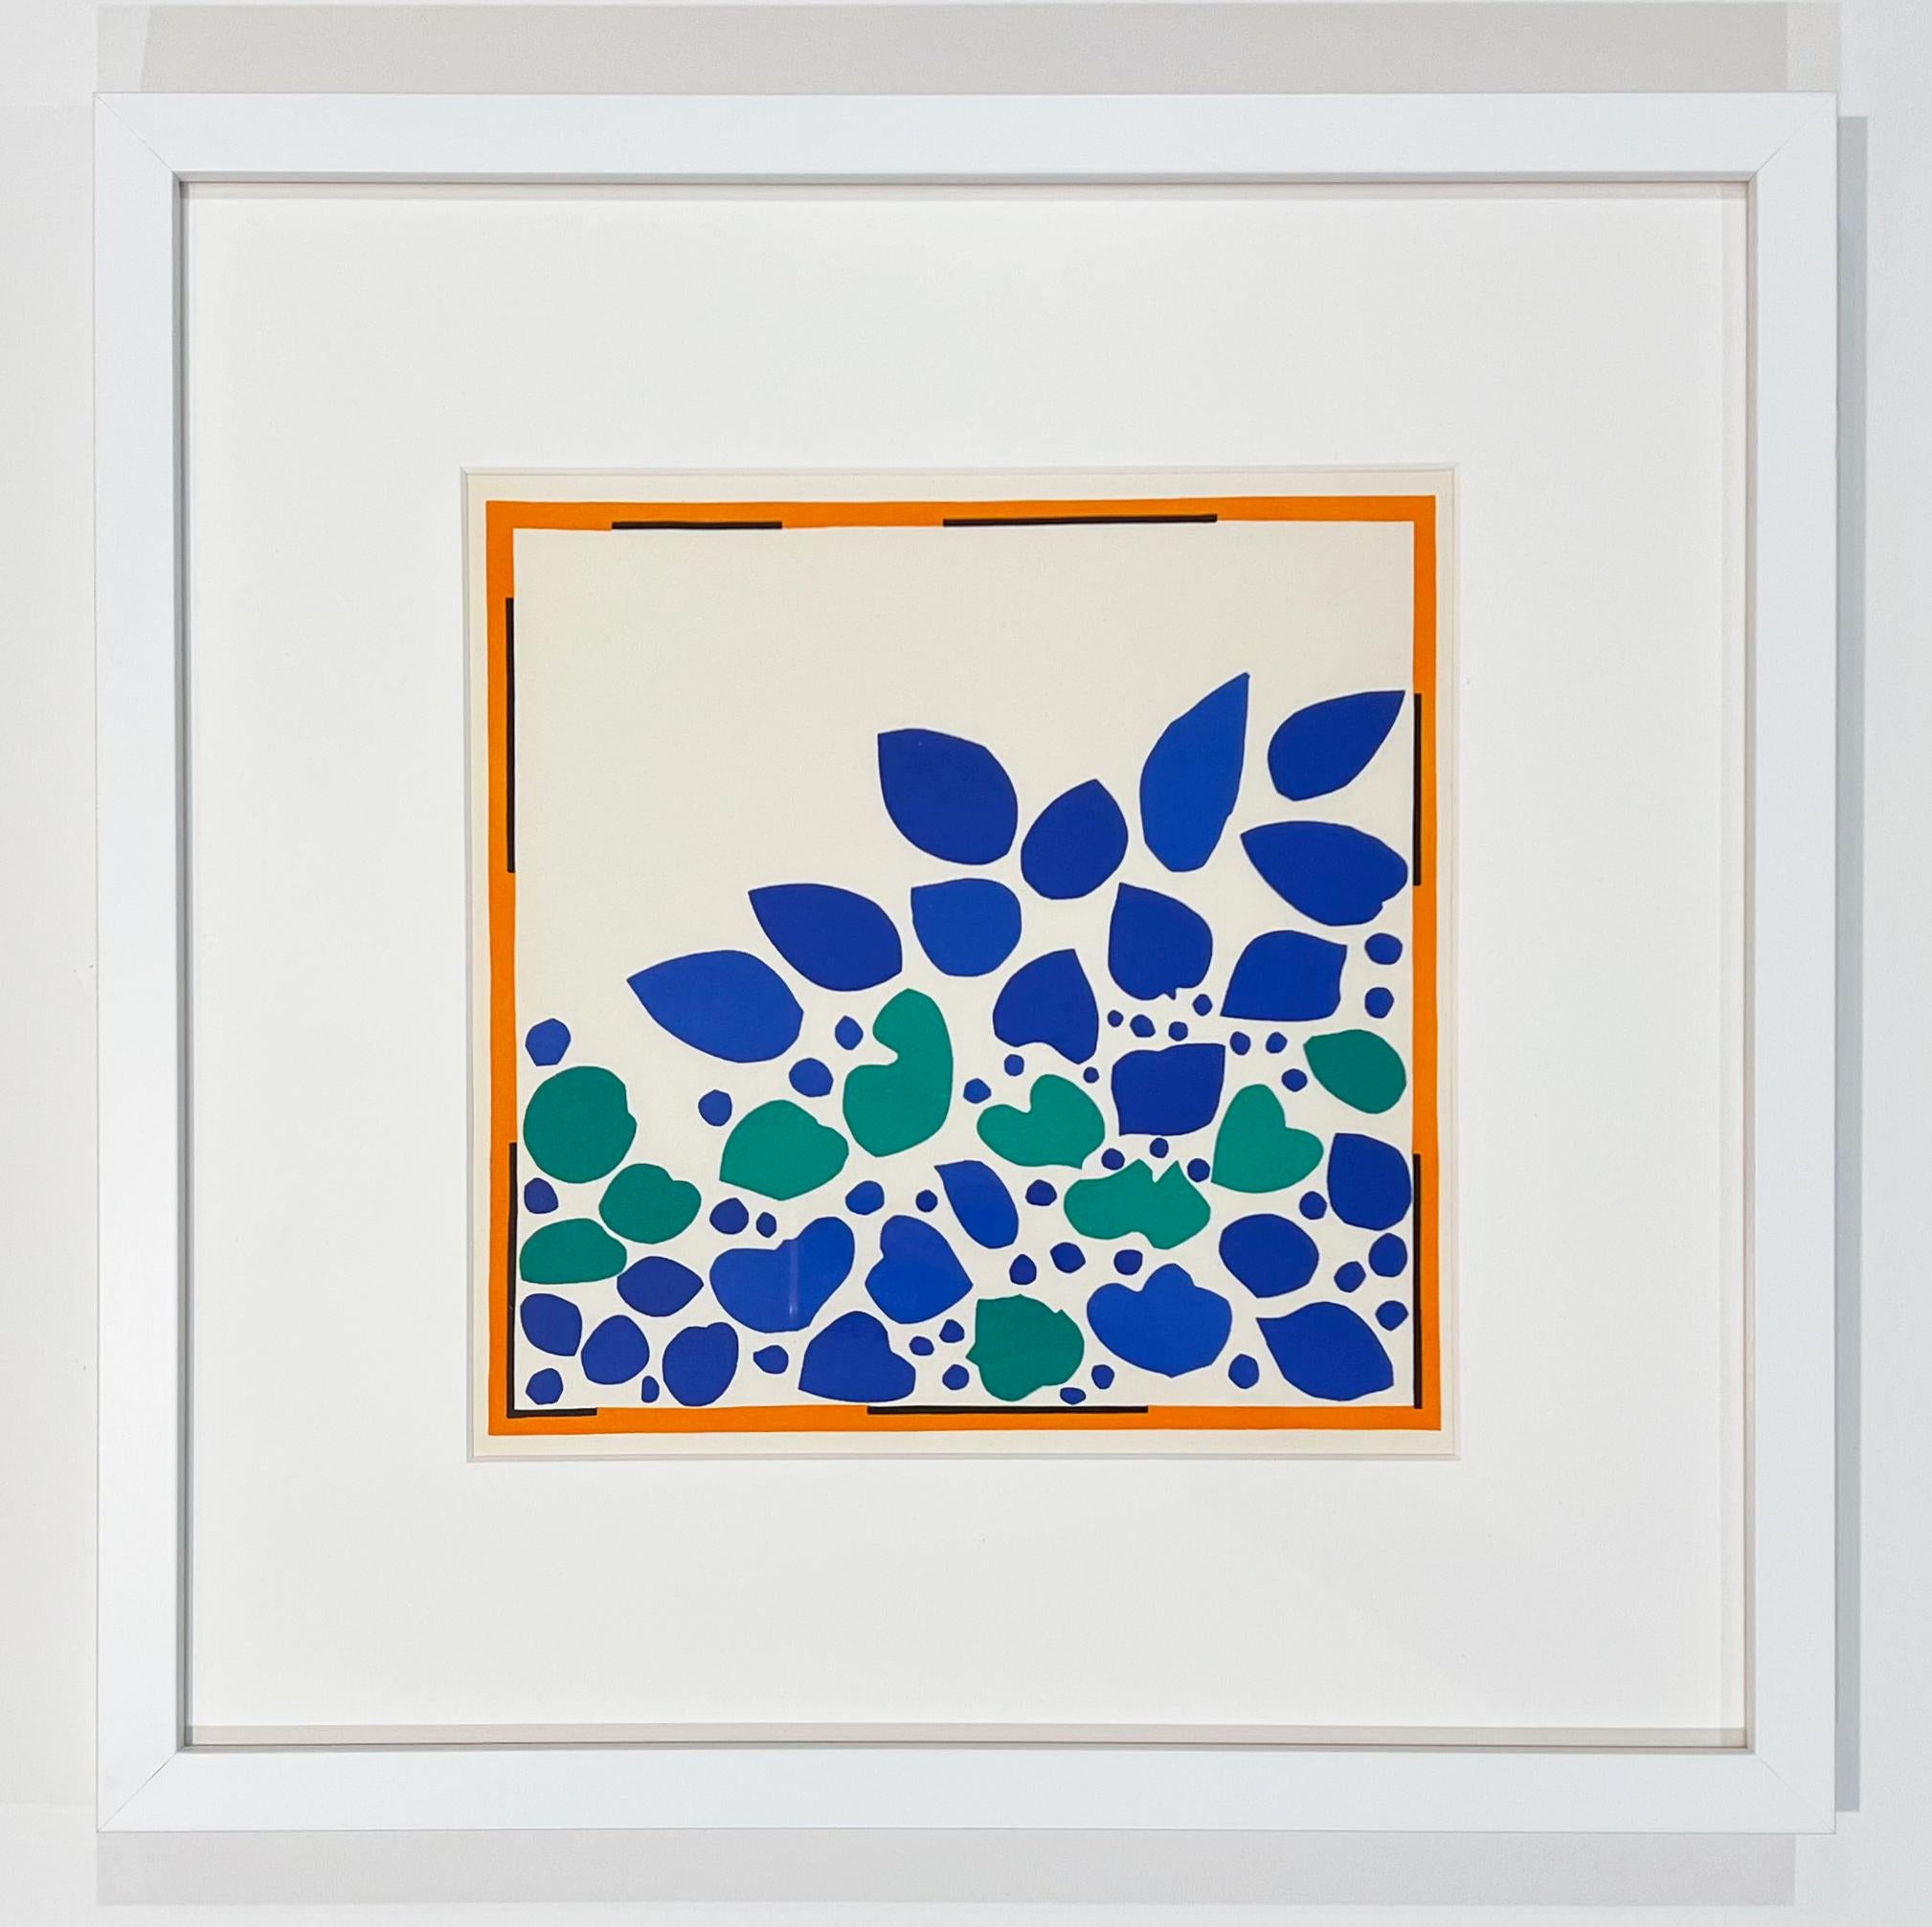 Lierre - Print by (after) Henri Matisse